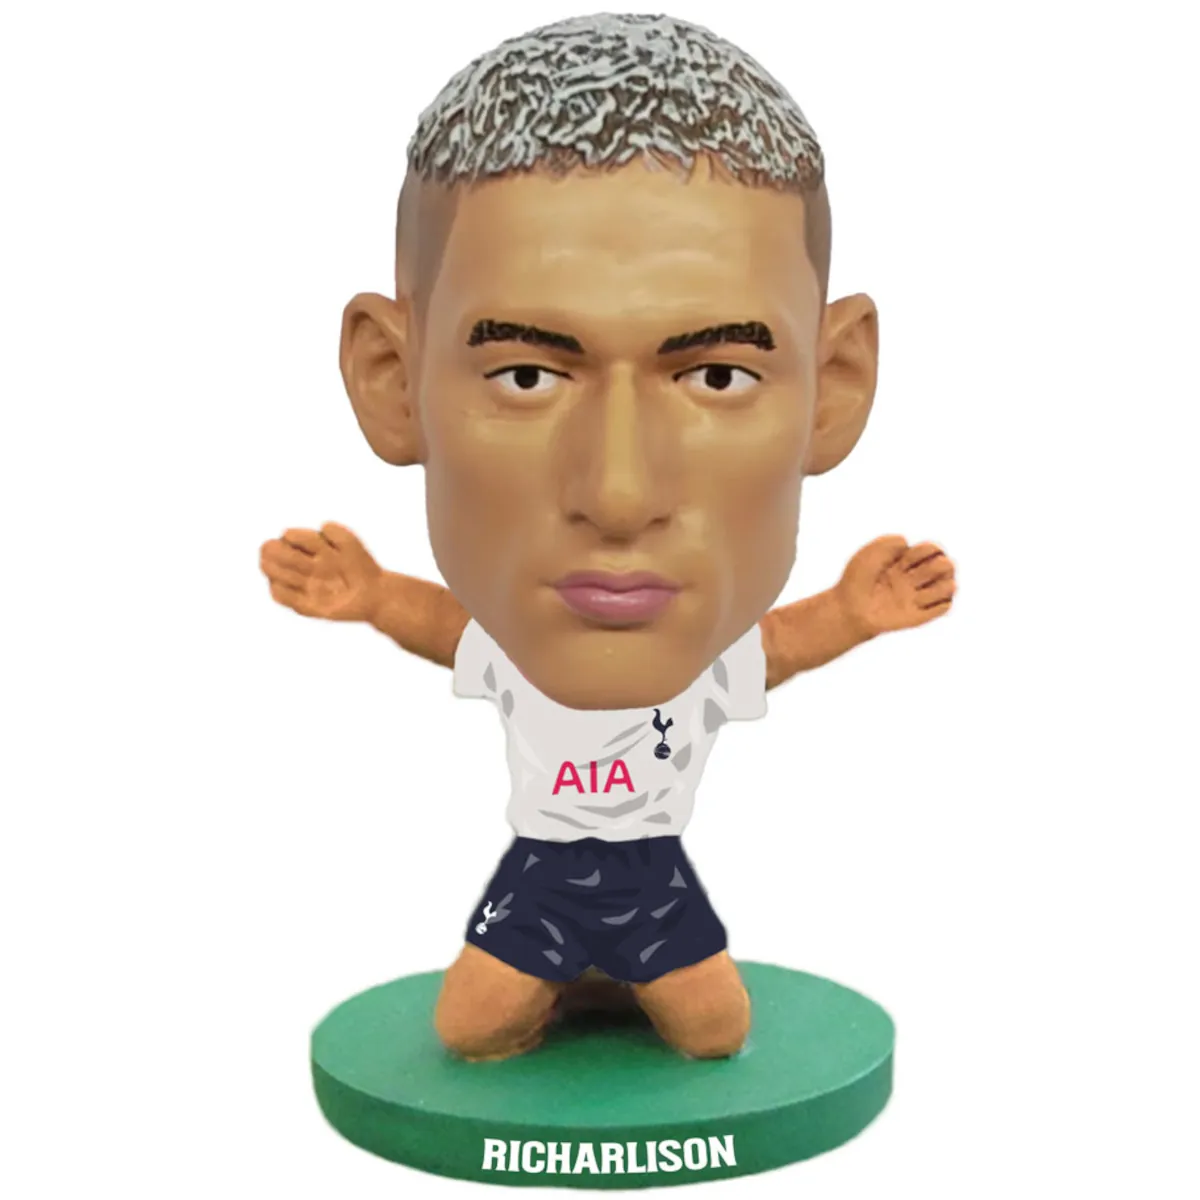 TM-03552 Tottenham Hotspur FC SoccerStarz Collectable Figure - Richarlison